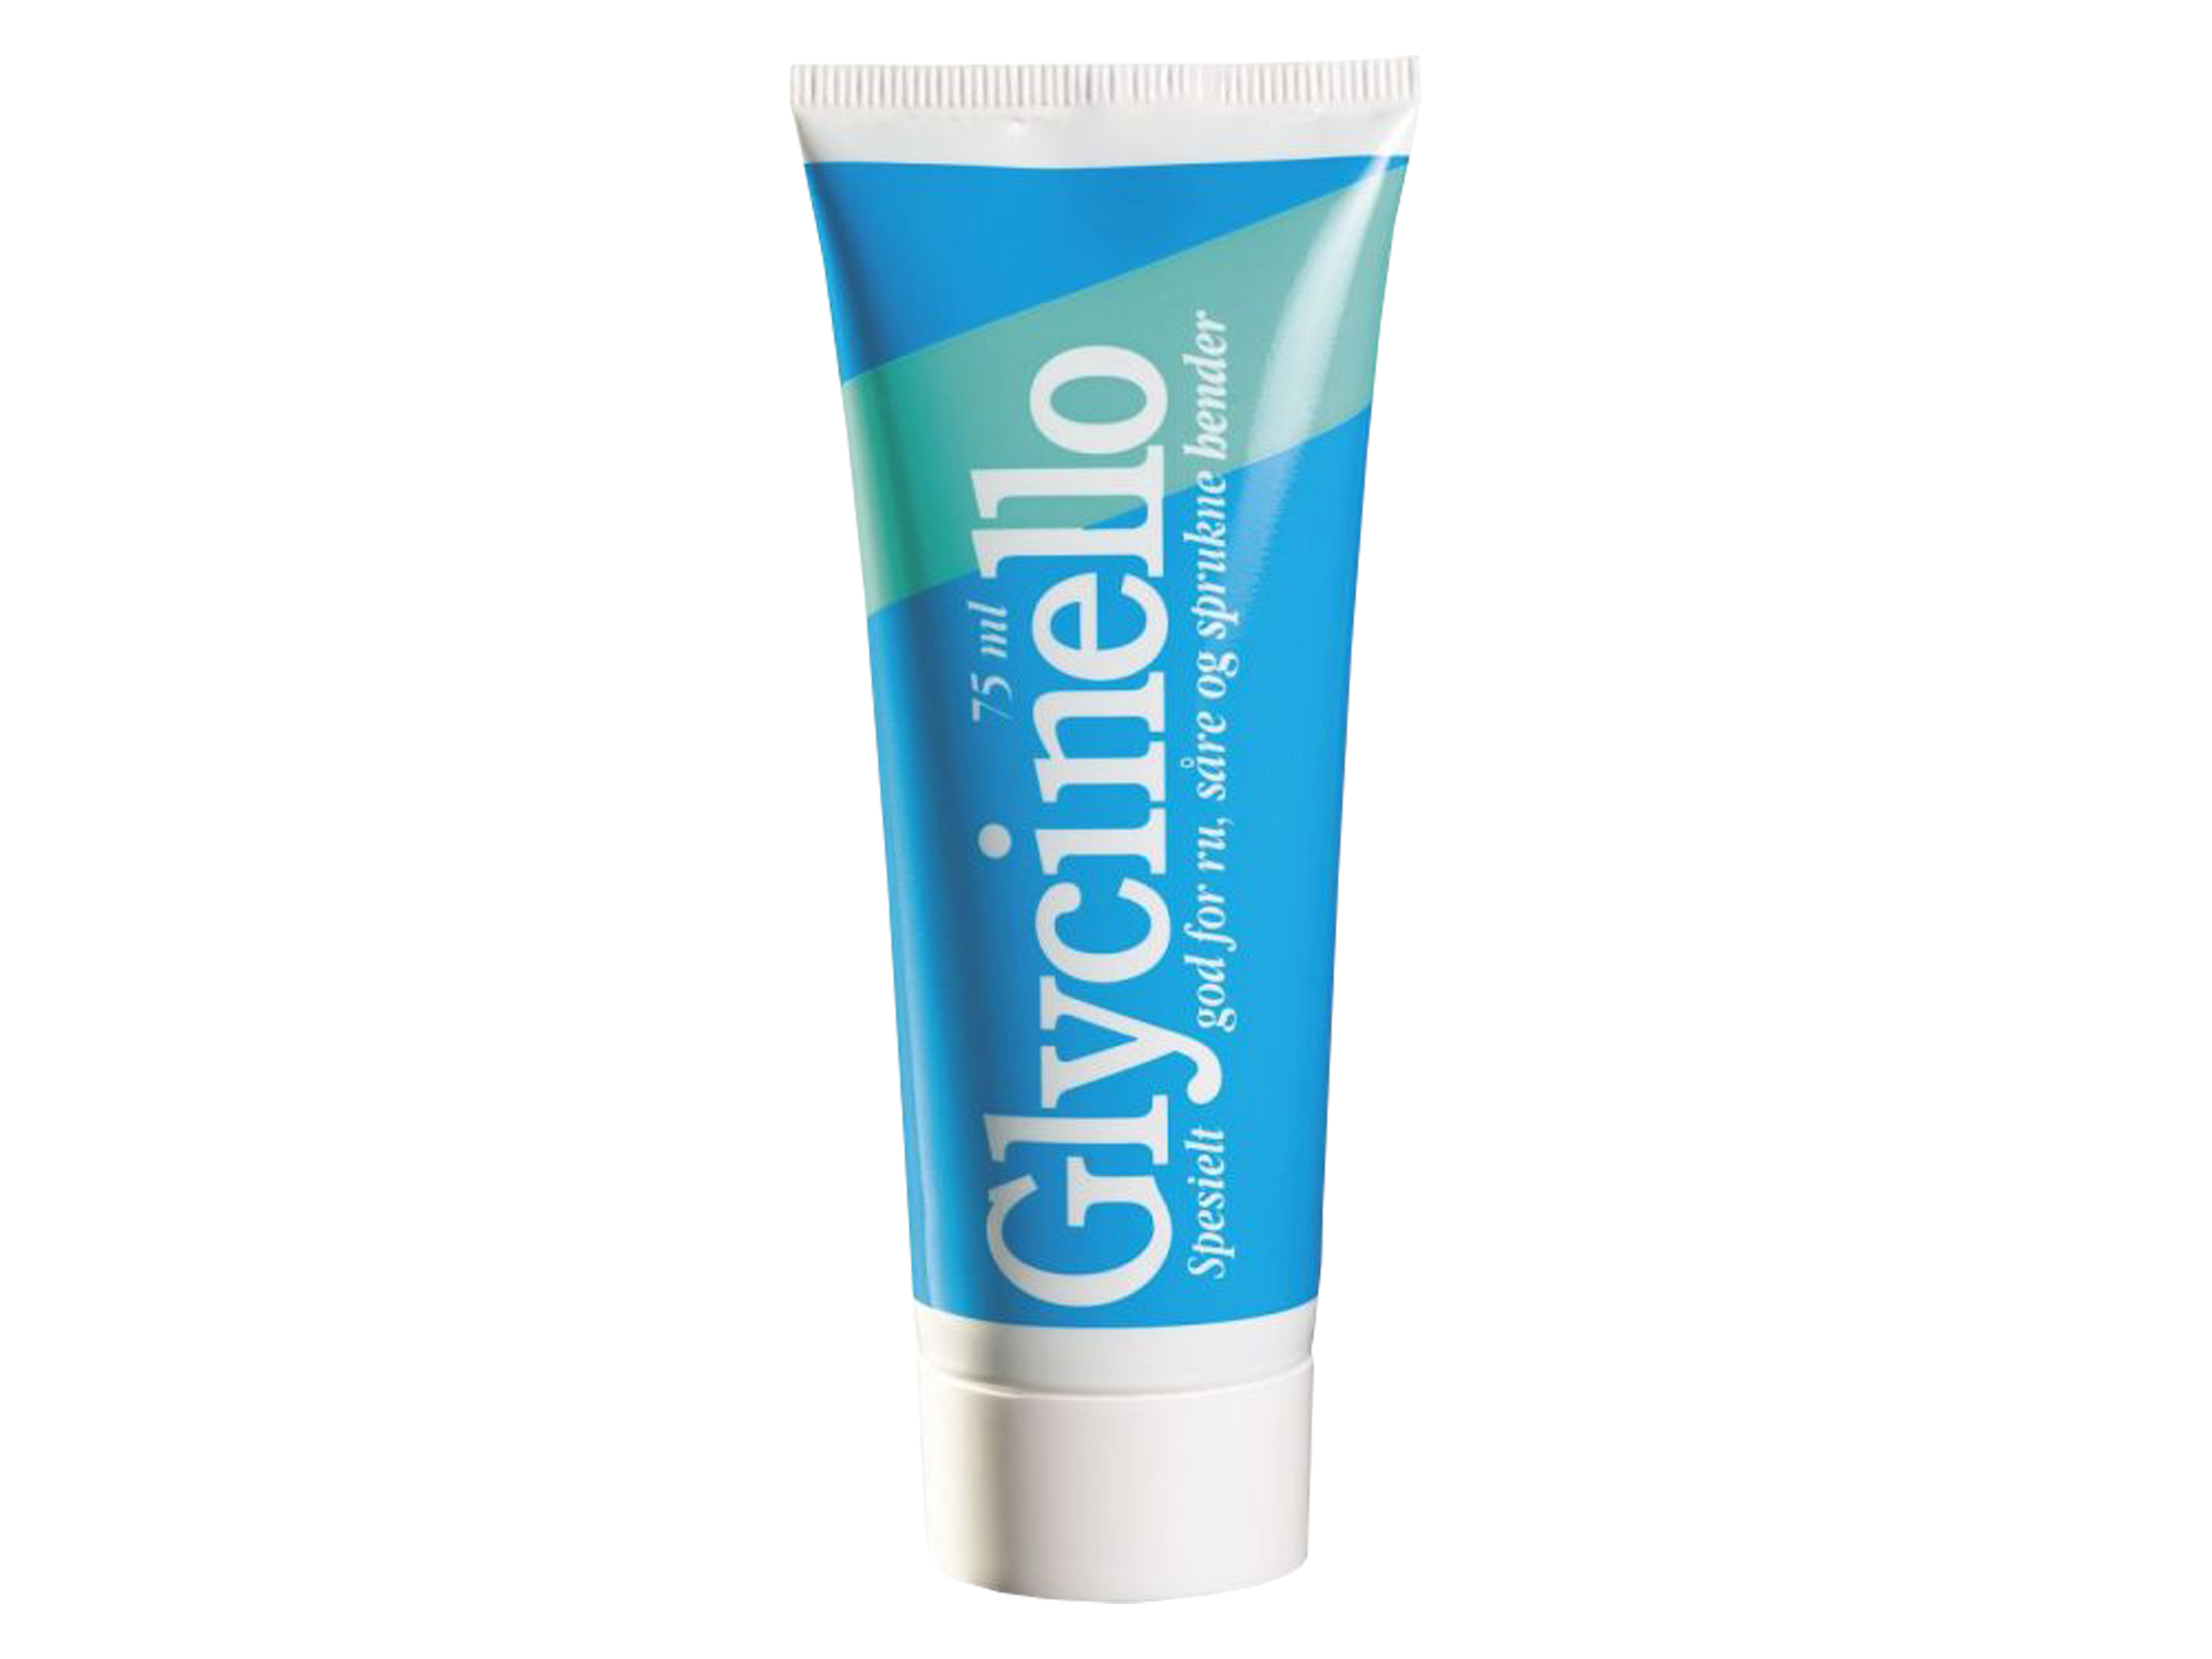 Glycinello Glycinello Håndkrem, 75 ml